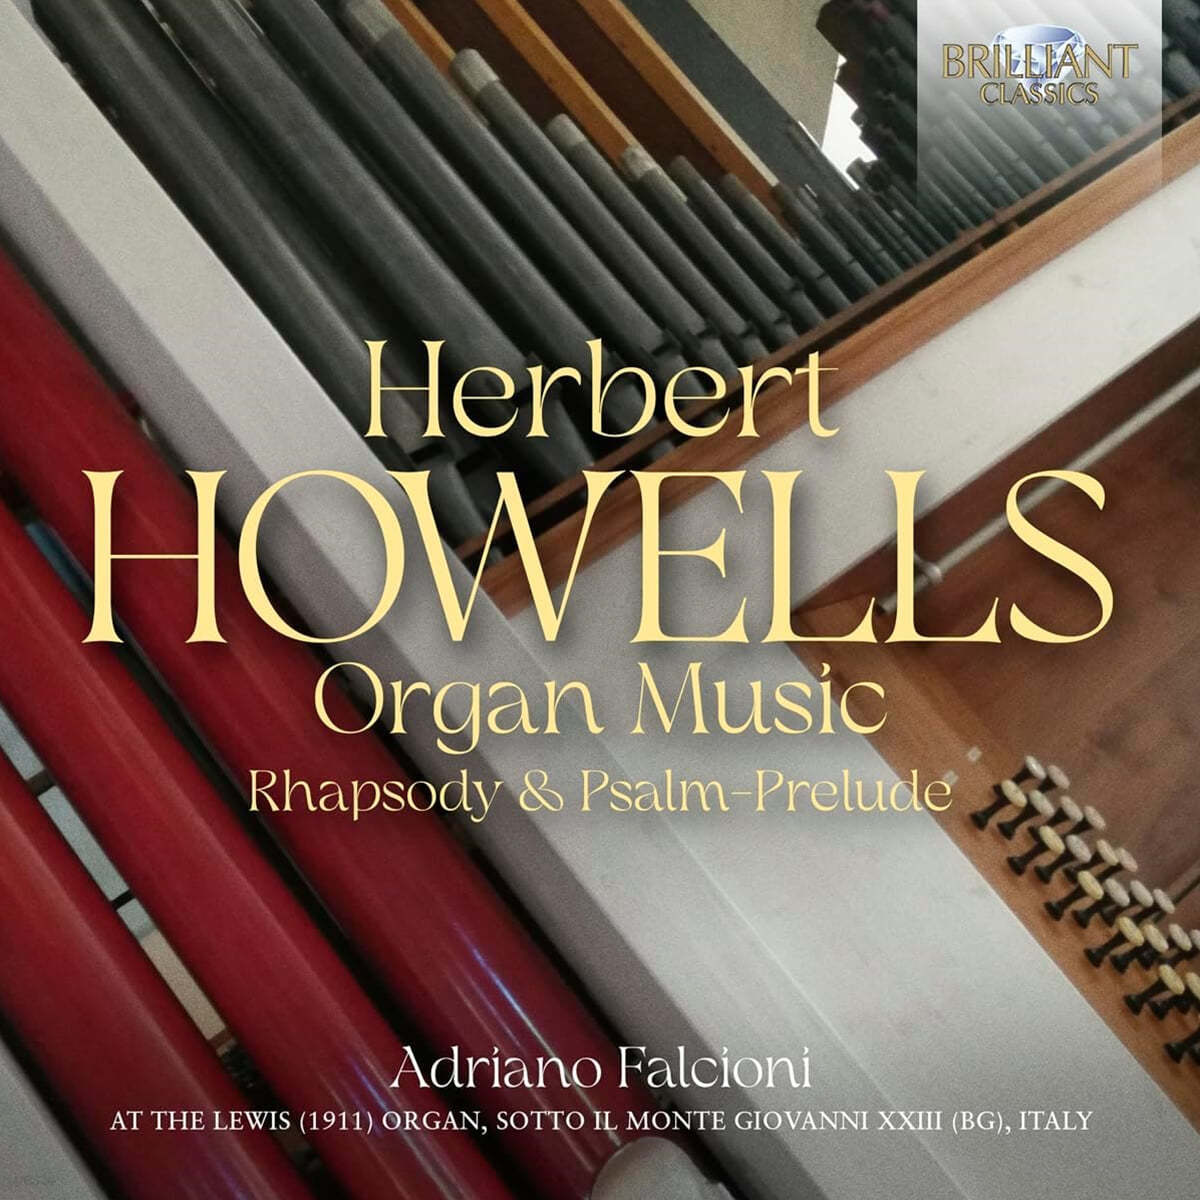 Adriano Falcioni 허버트 하웰스: 오르간 음악 (Howells: Organ Music; Rhapsody & Psalm-Prelude)